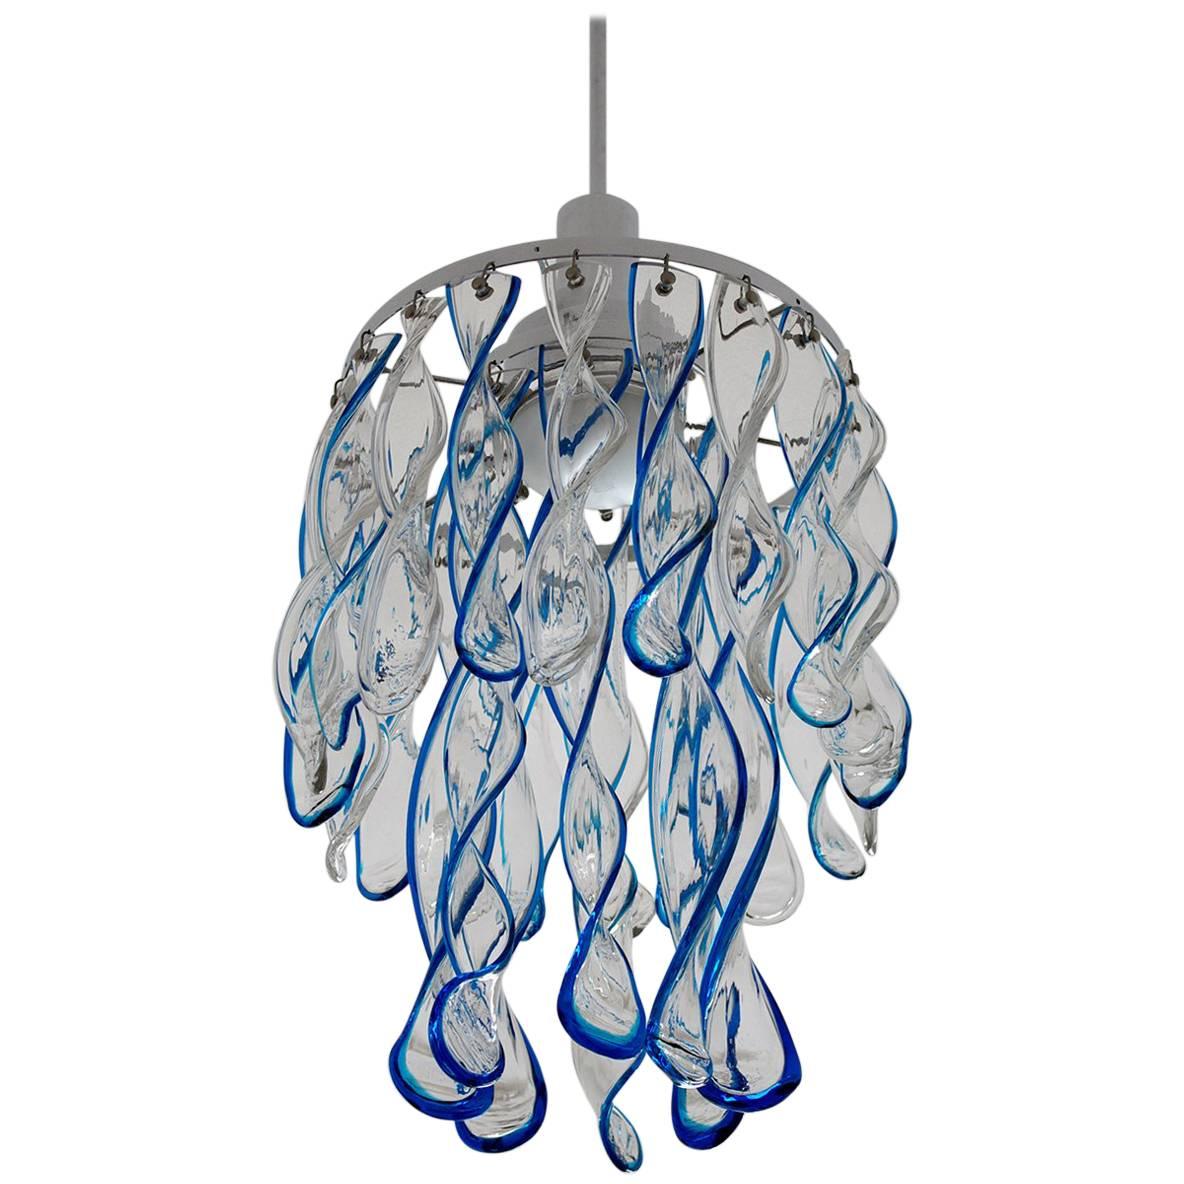 Rare Murano Glass Swirl Ceiling Light Chandelier by Mazzega, Italy, 1960s